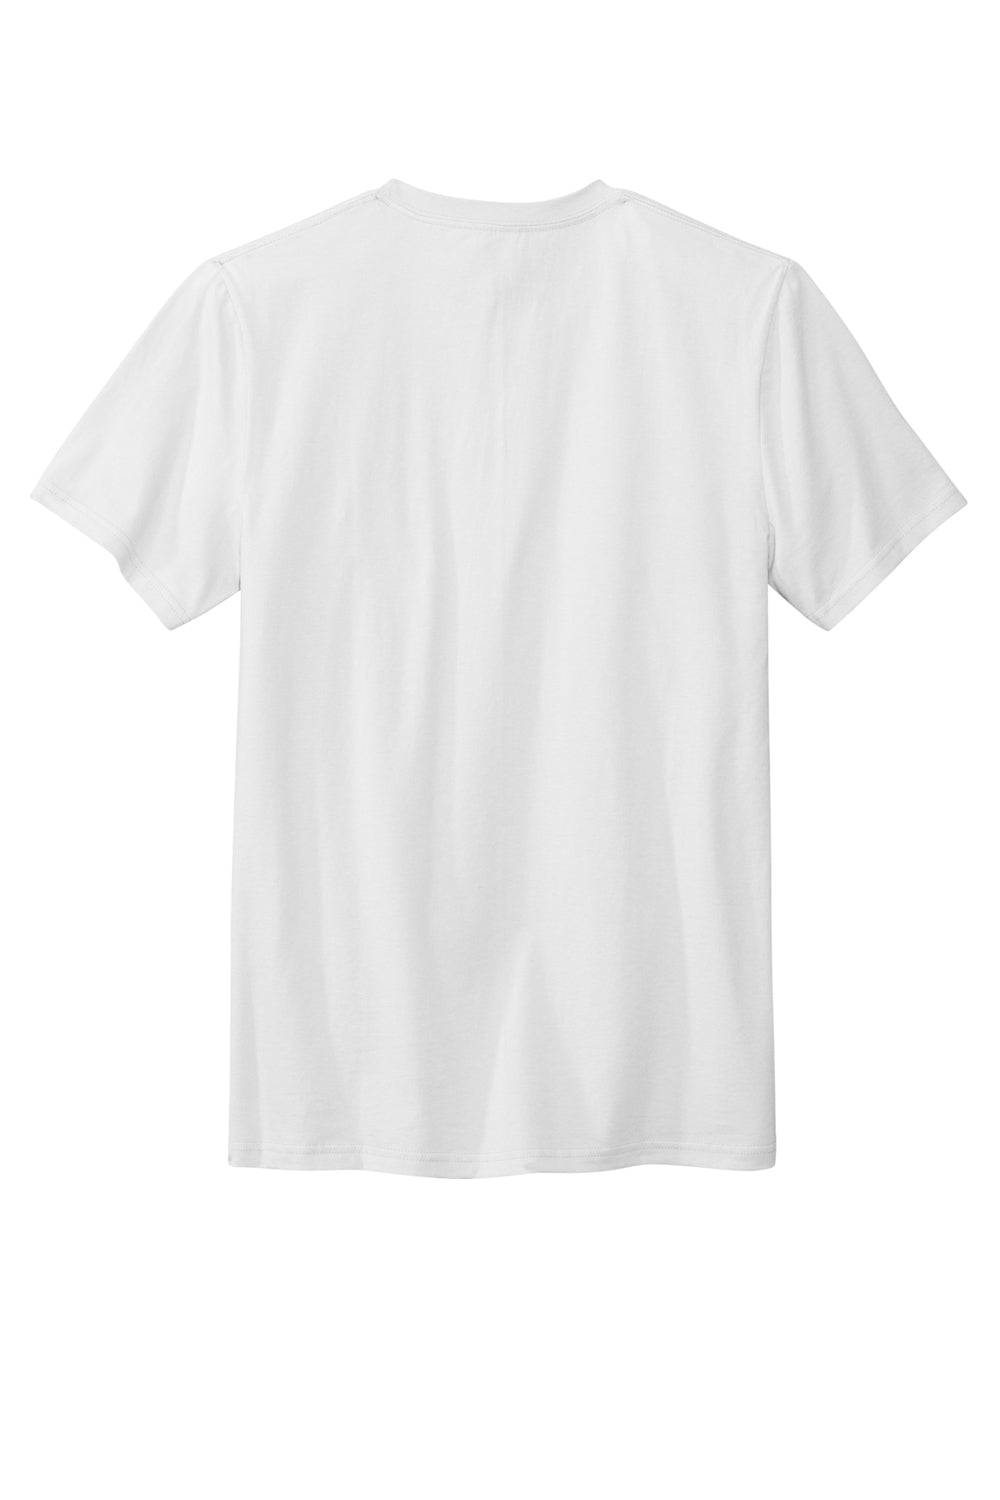 Volunteer Knitwear VL45 Daily Short Sleeve Crewneck T-Shirt White Flat Back